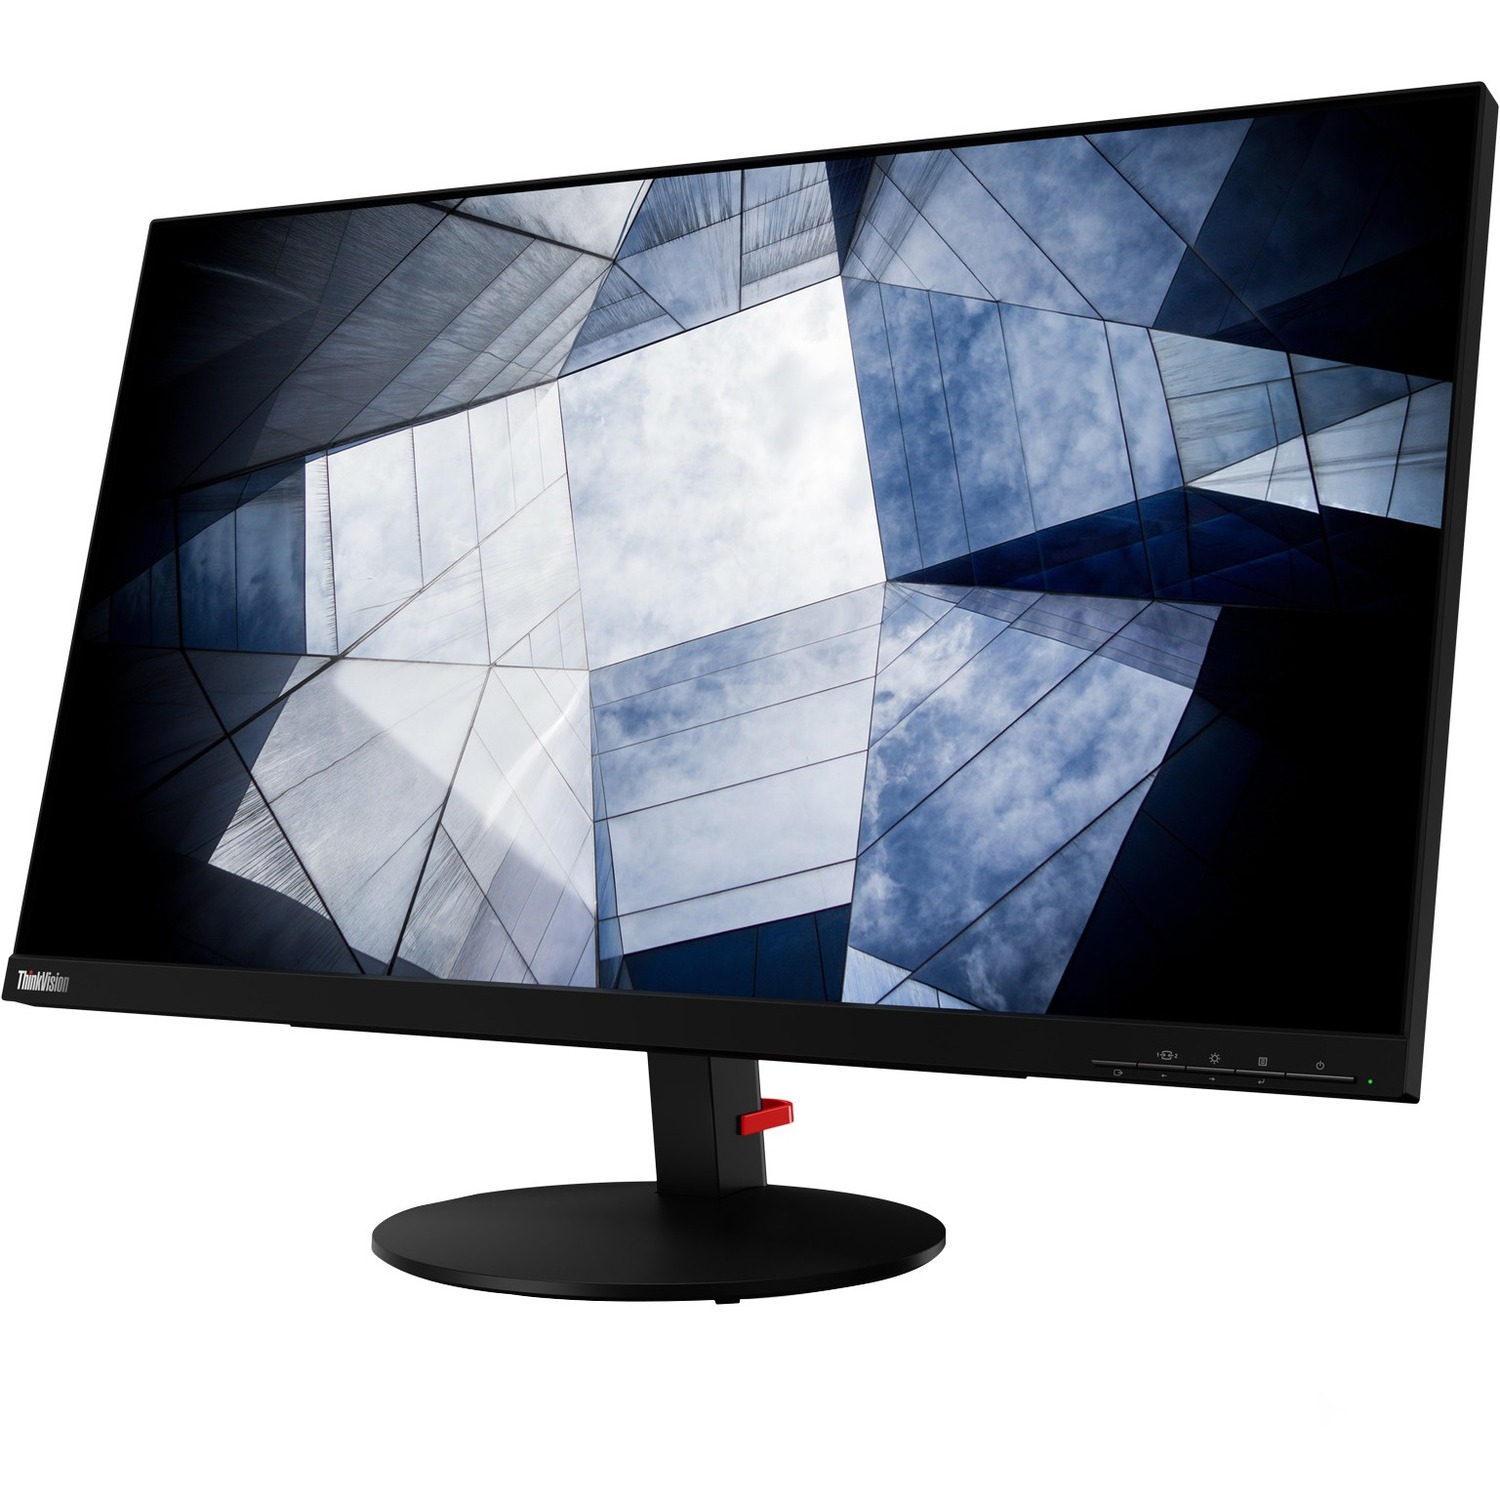  Lenovo ThinkVision S22e-20 21.5 Full HD WLED LCD Monitor -  16:9 - Raven Black : Electronics